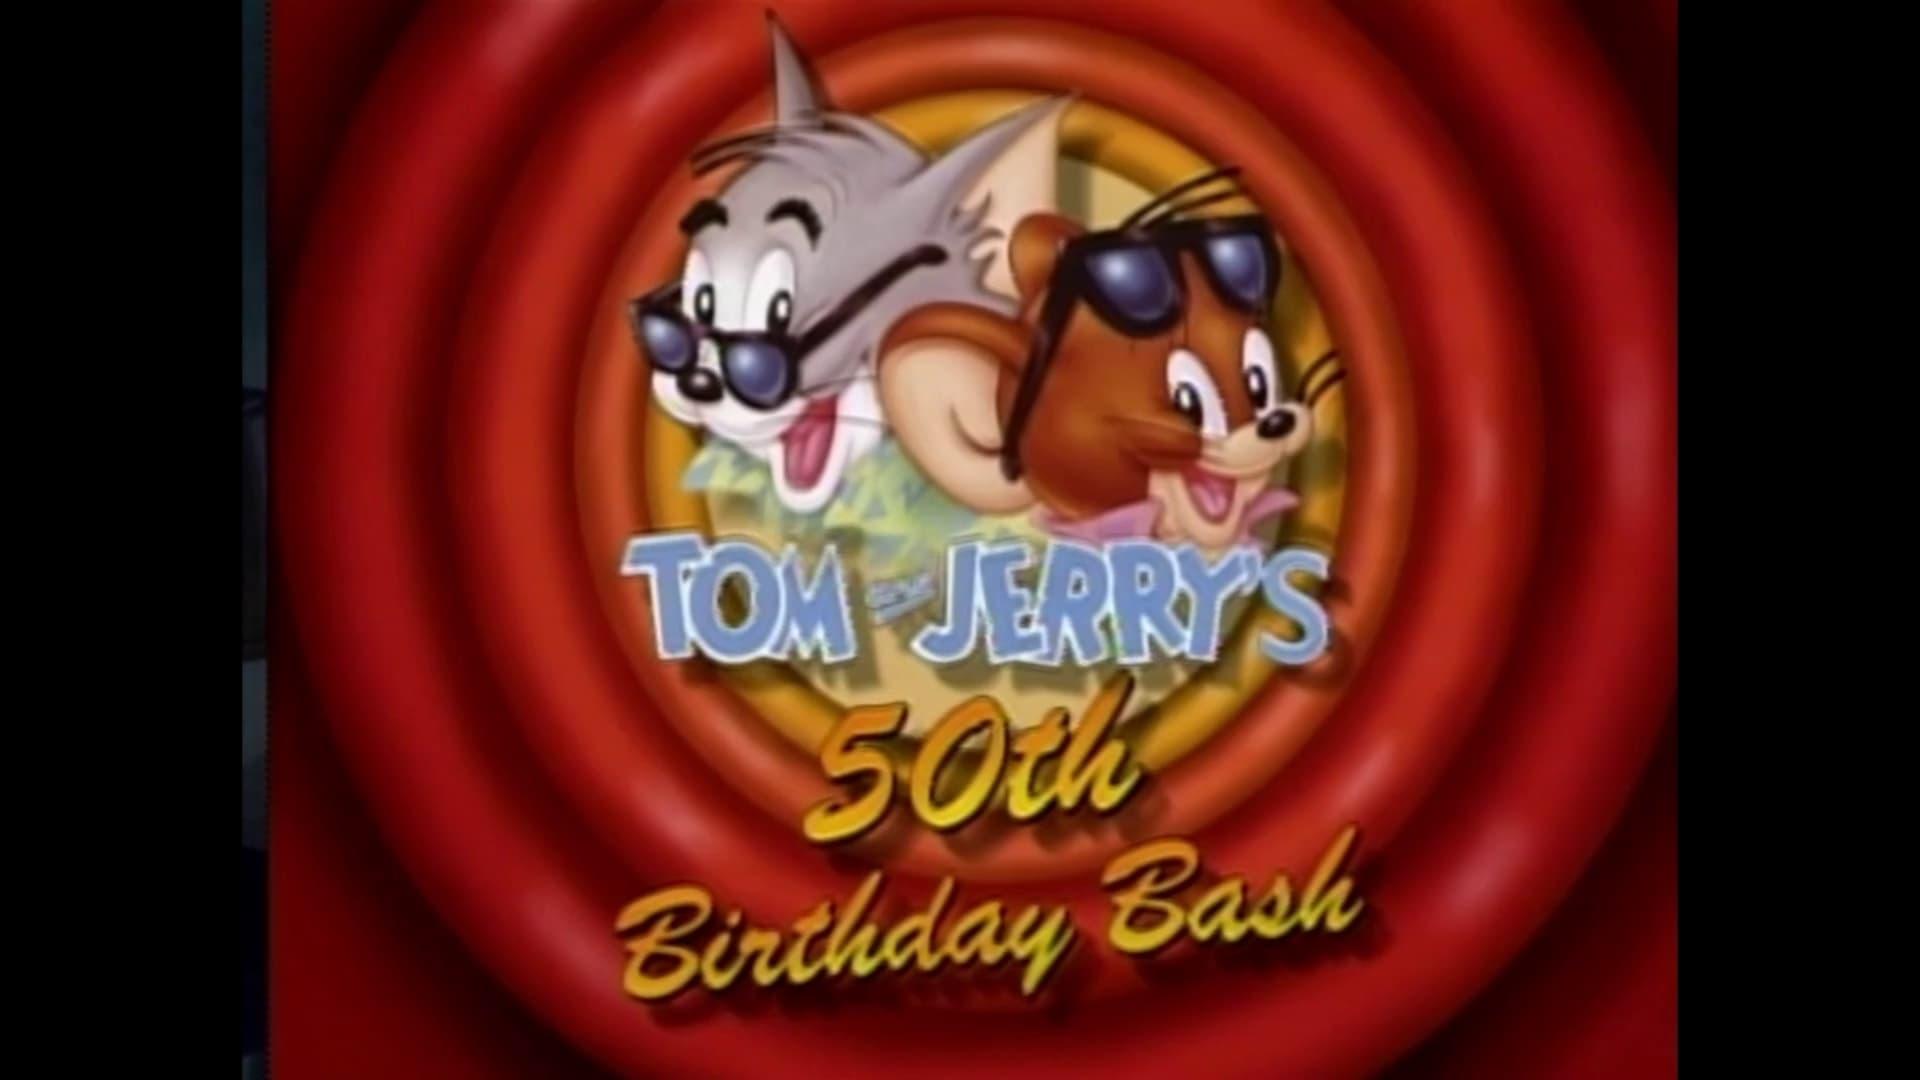 Tom & Jerry's 50th Birthday Bash backdrop